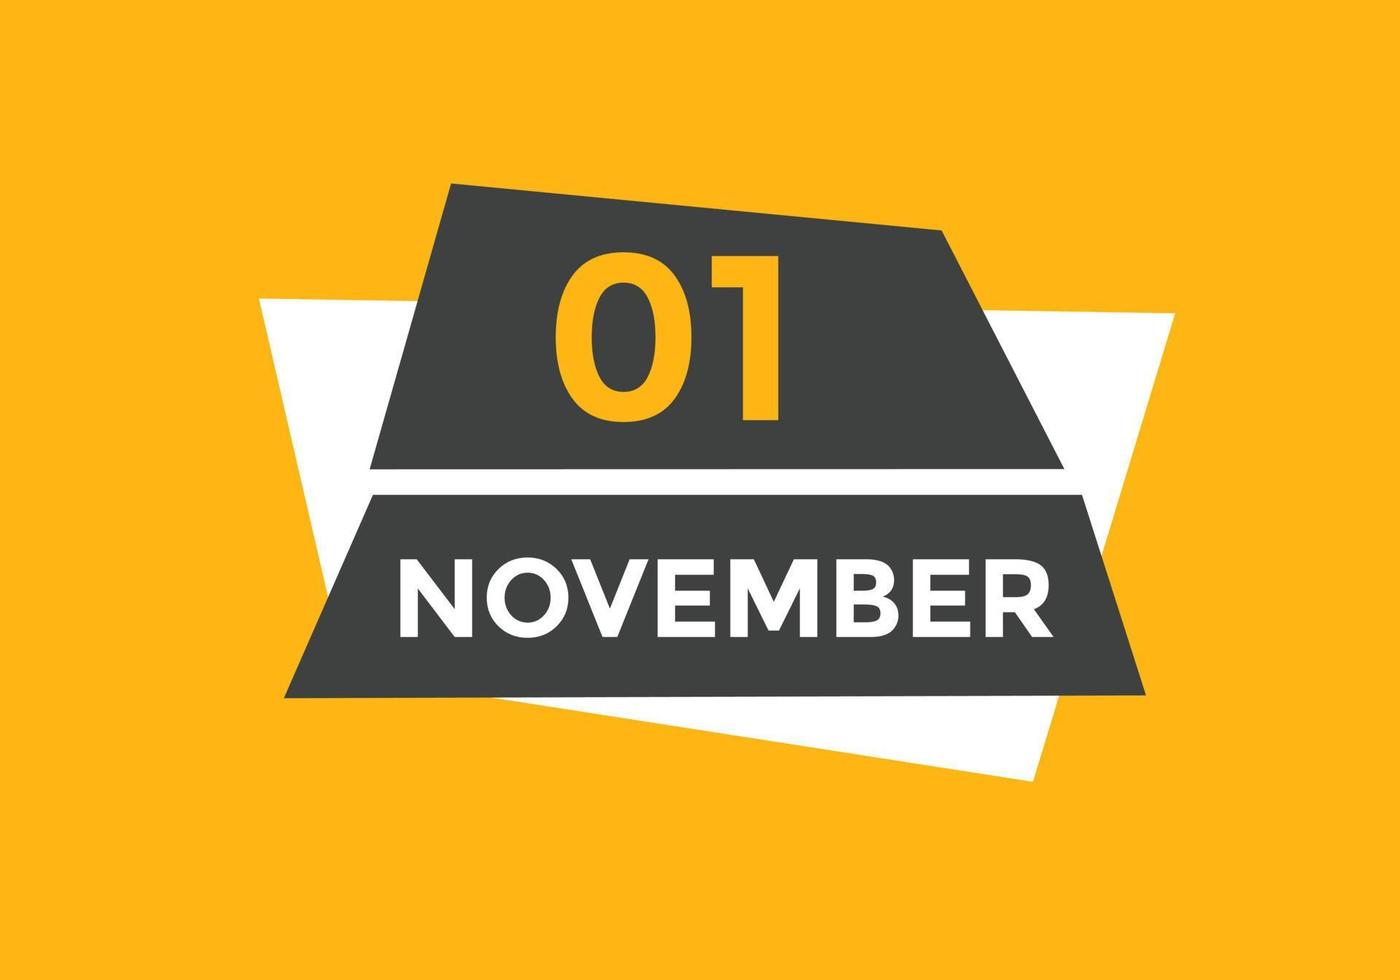 november 1 calendar reminder. 1st november daily calendar icon template. Calendar 1st november icon Design template. Vector illustration